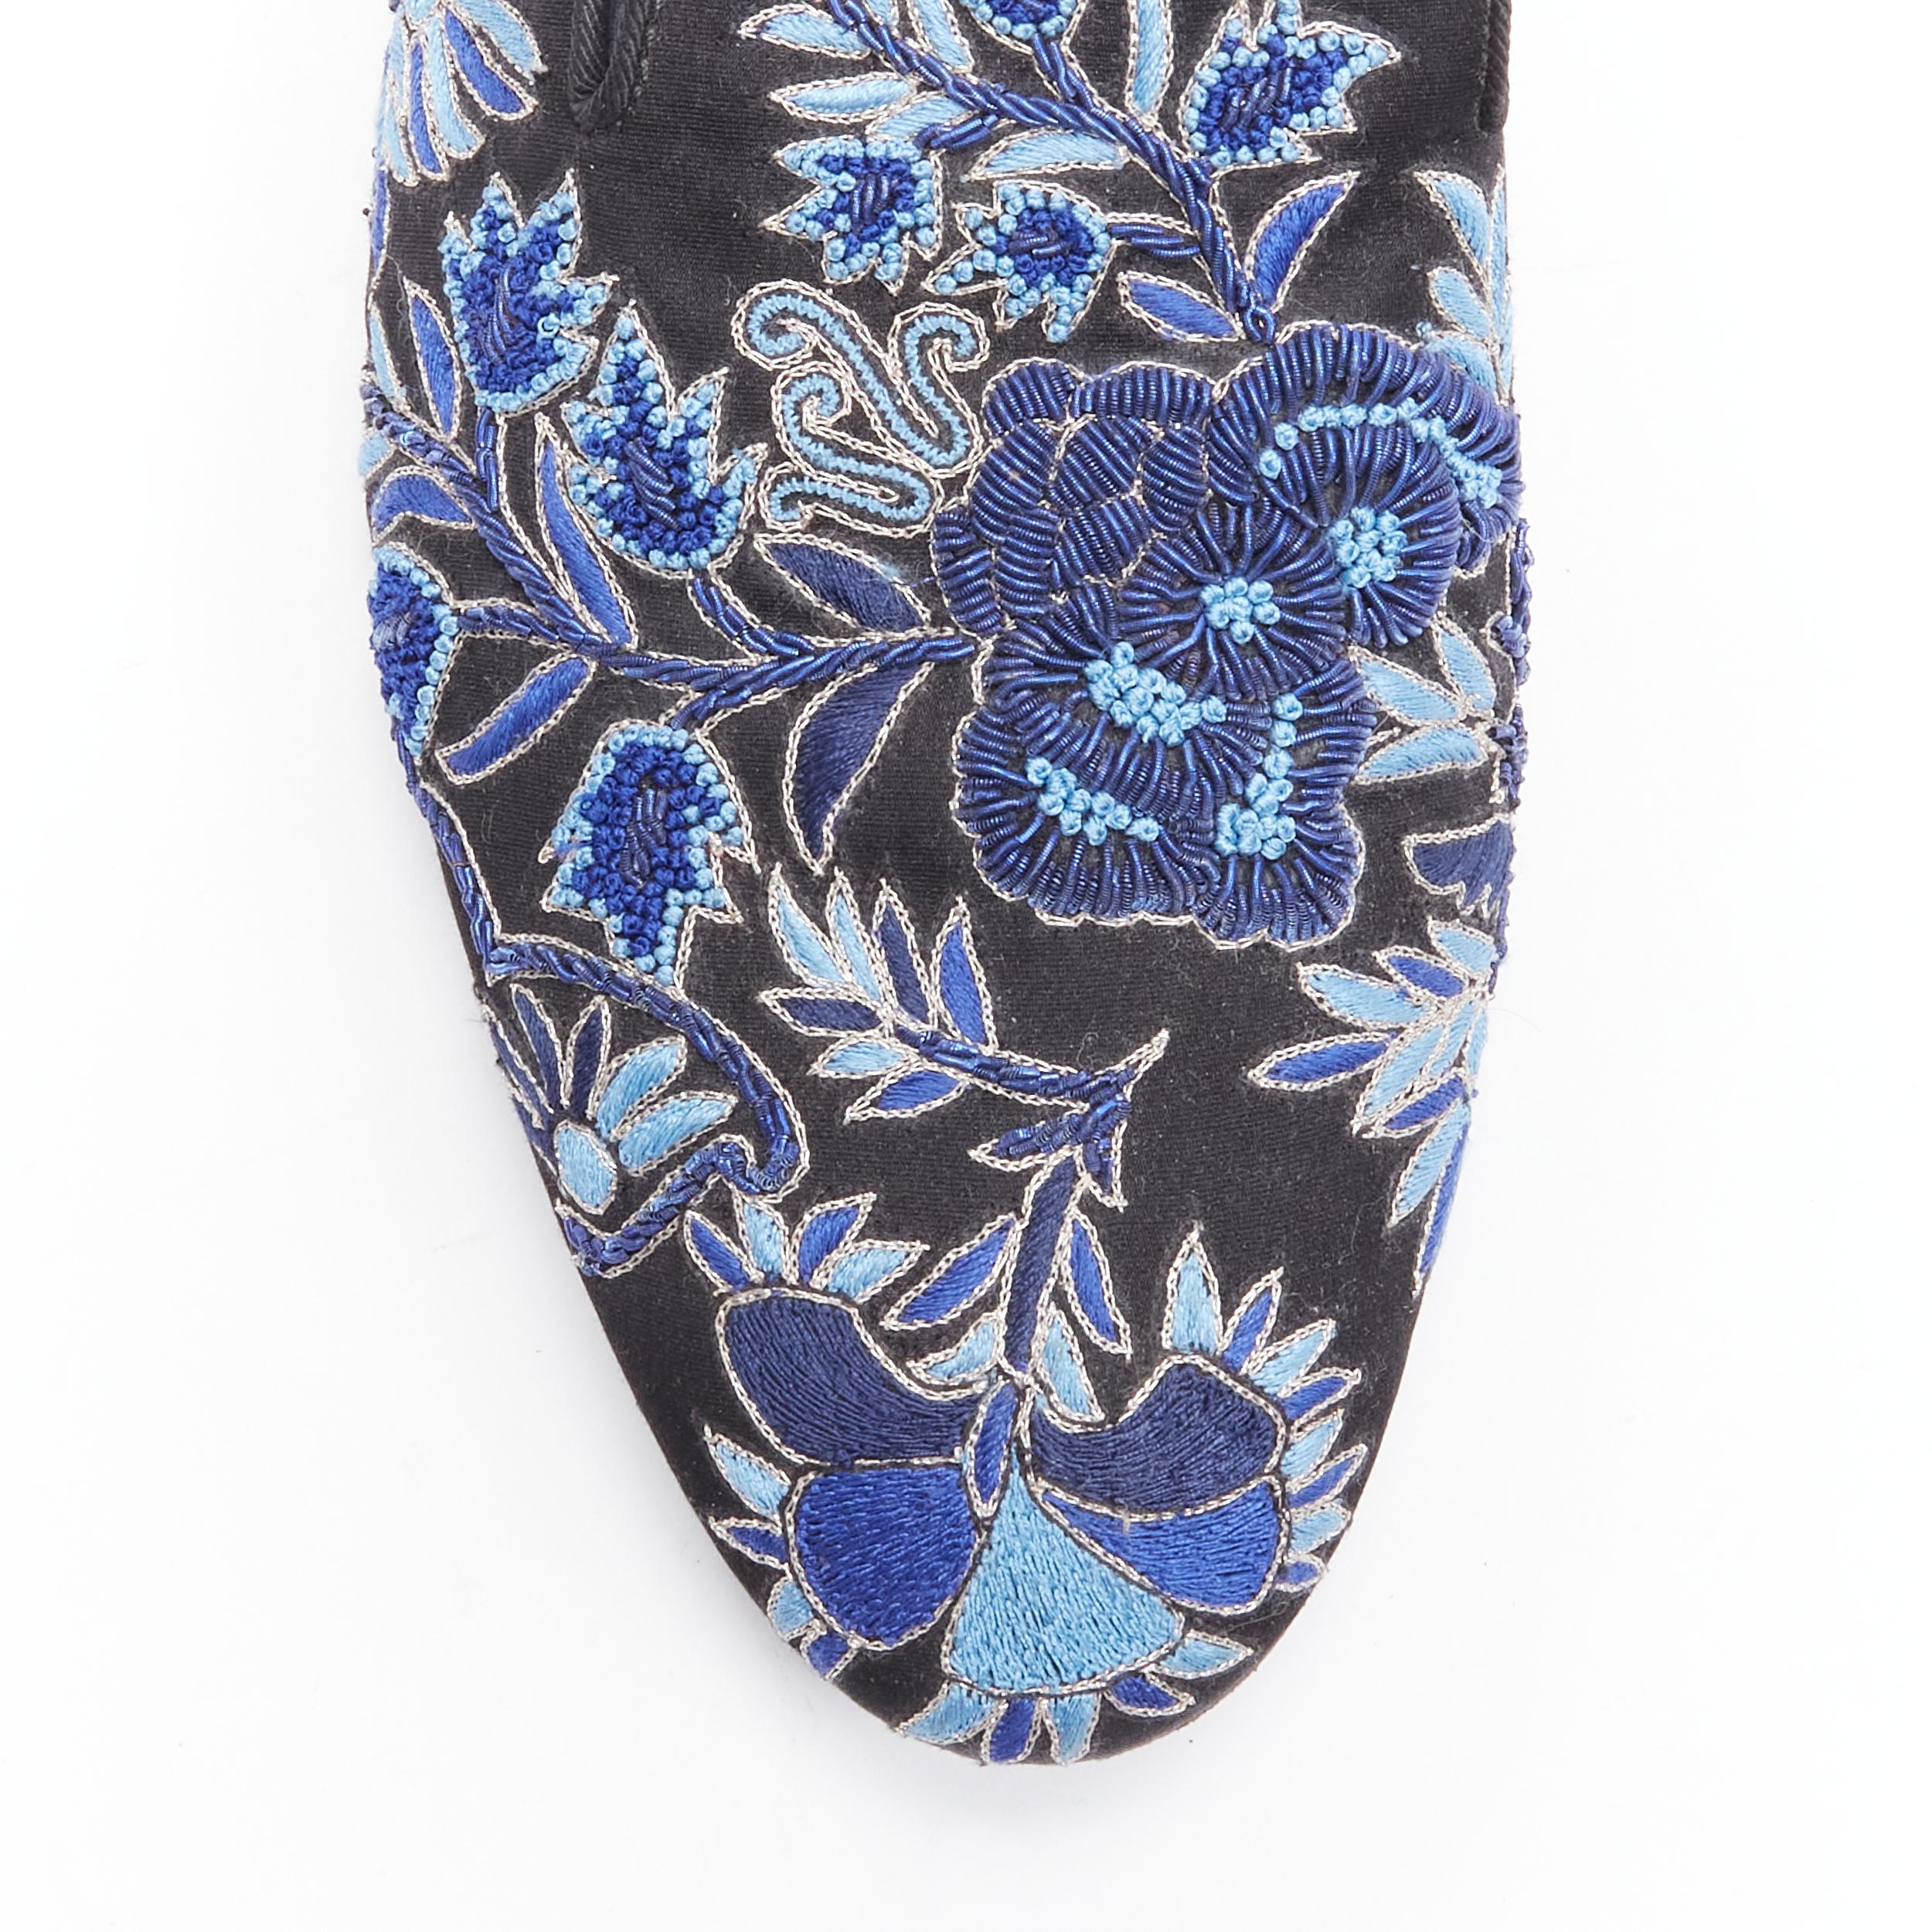 LOUIS LEEMAN black satin blue floral embroidery evening loafer EU42 US9 For Sale 2